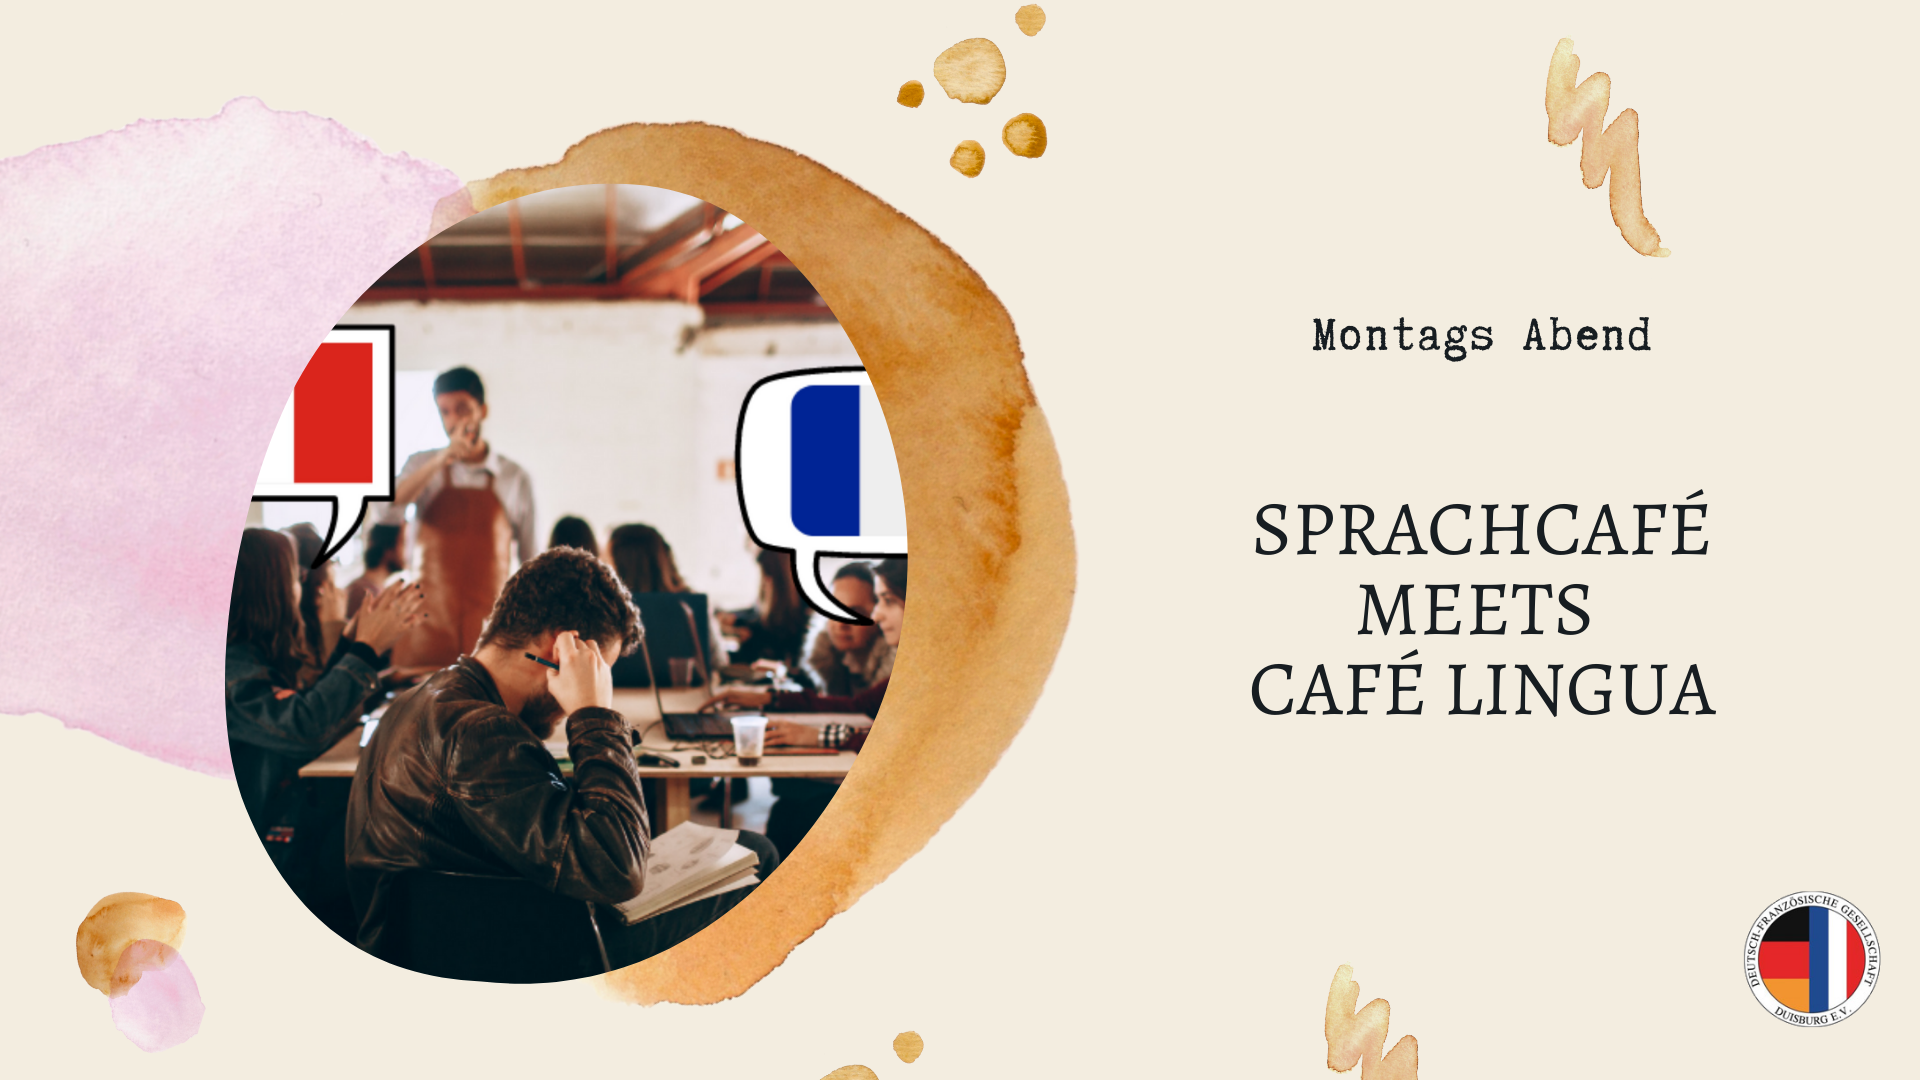 Sprachcafé meets Café Lingua